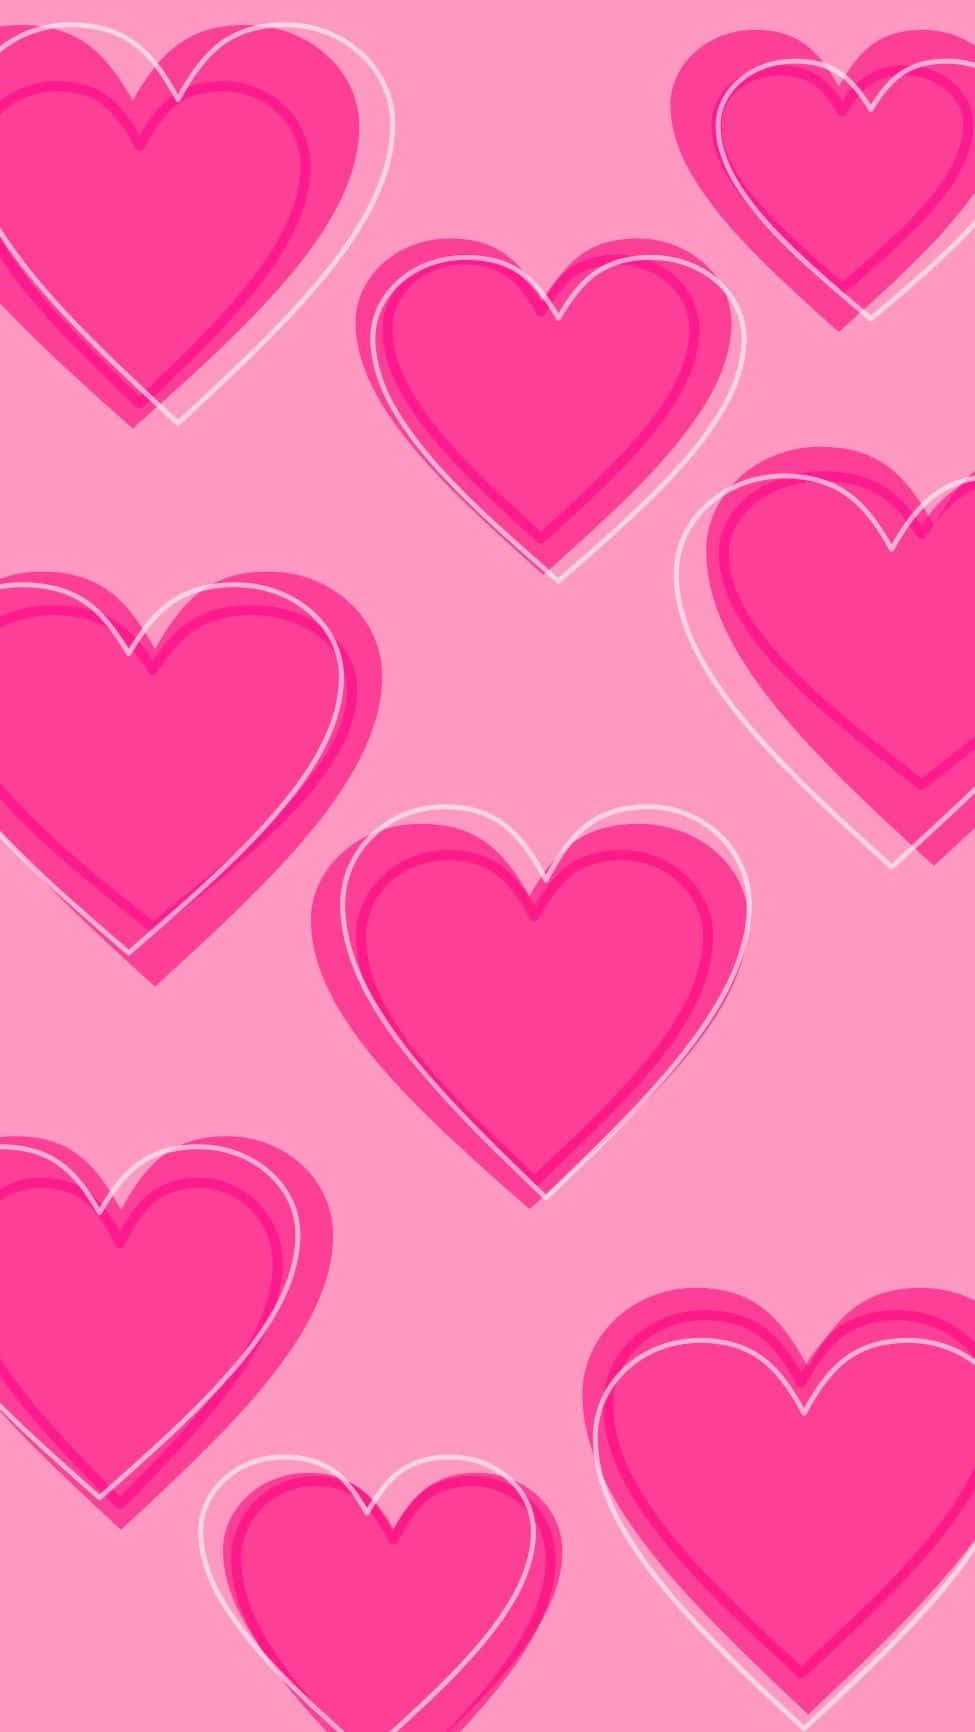 Pink Hearts Pattern Aesthetic.jpg Wallpaper